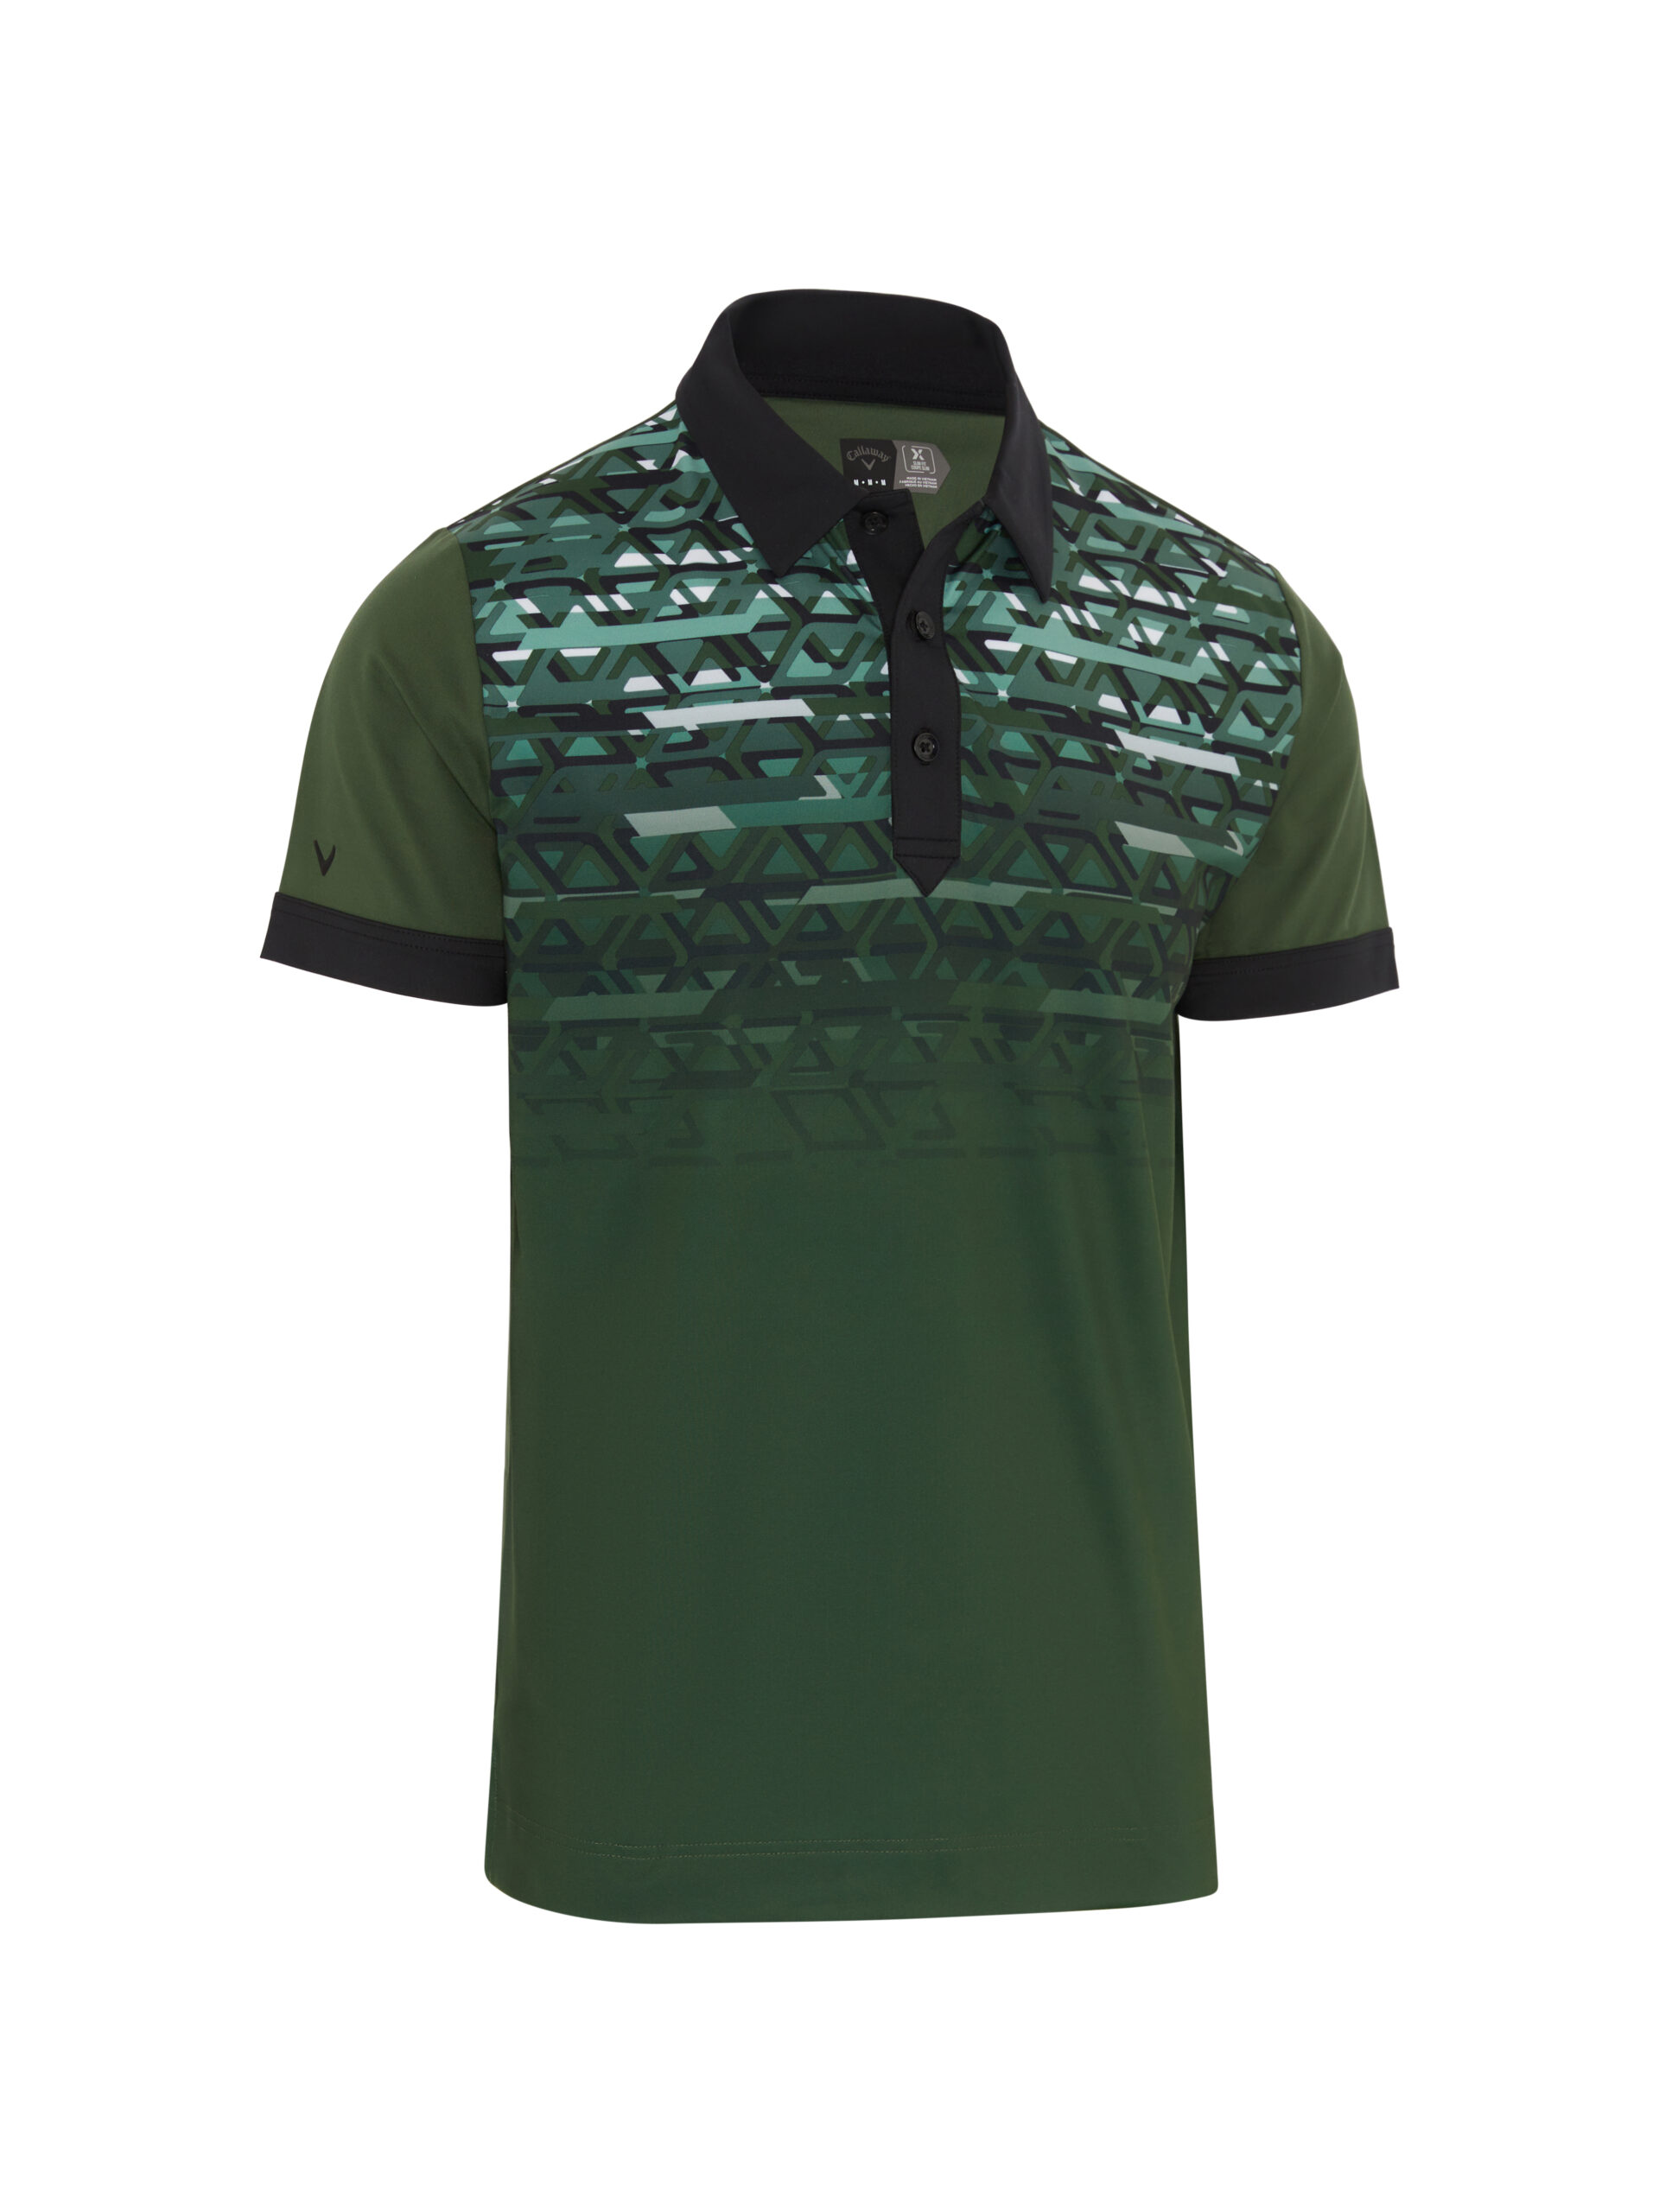 Callaway Ombre Motion Chev pánské golfové triko, tmavě zelené, vel. M